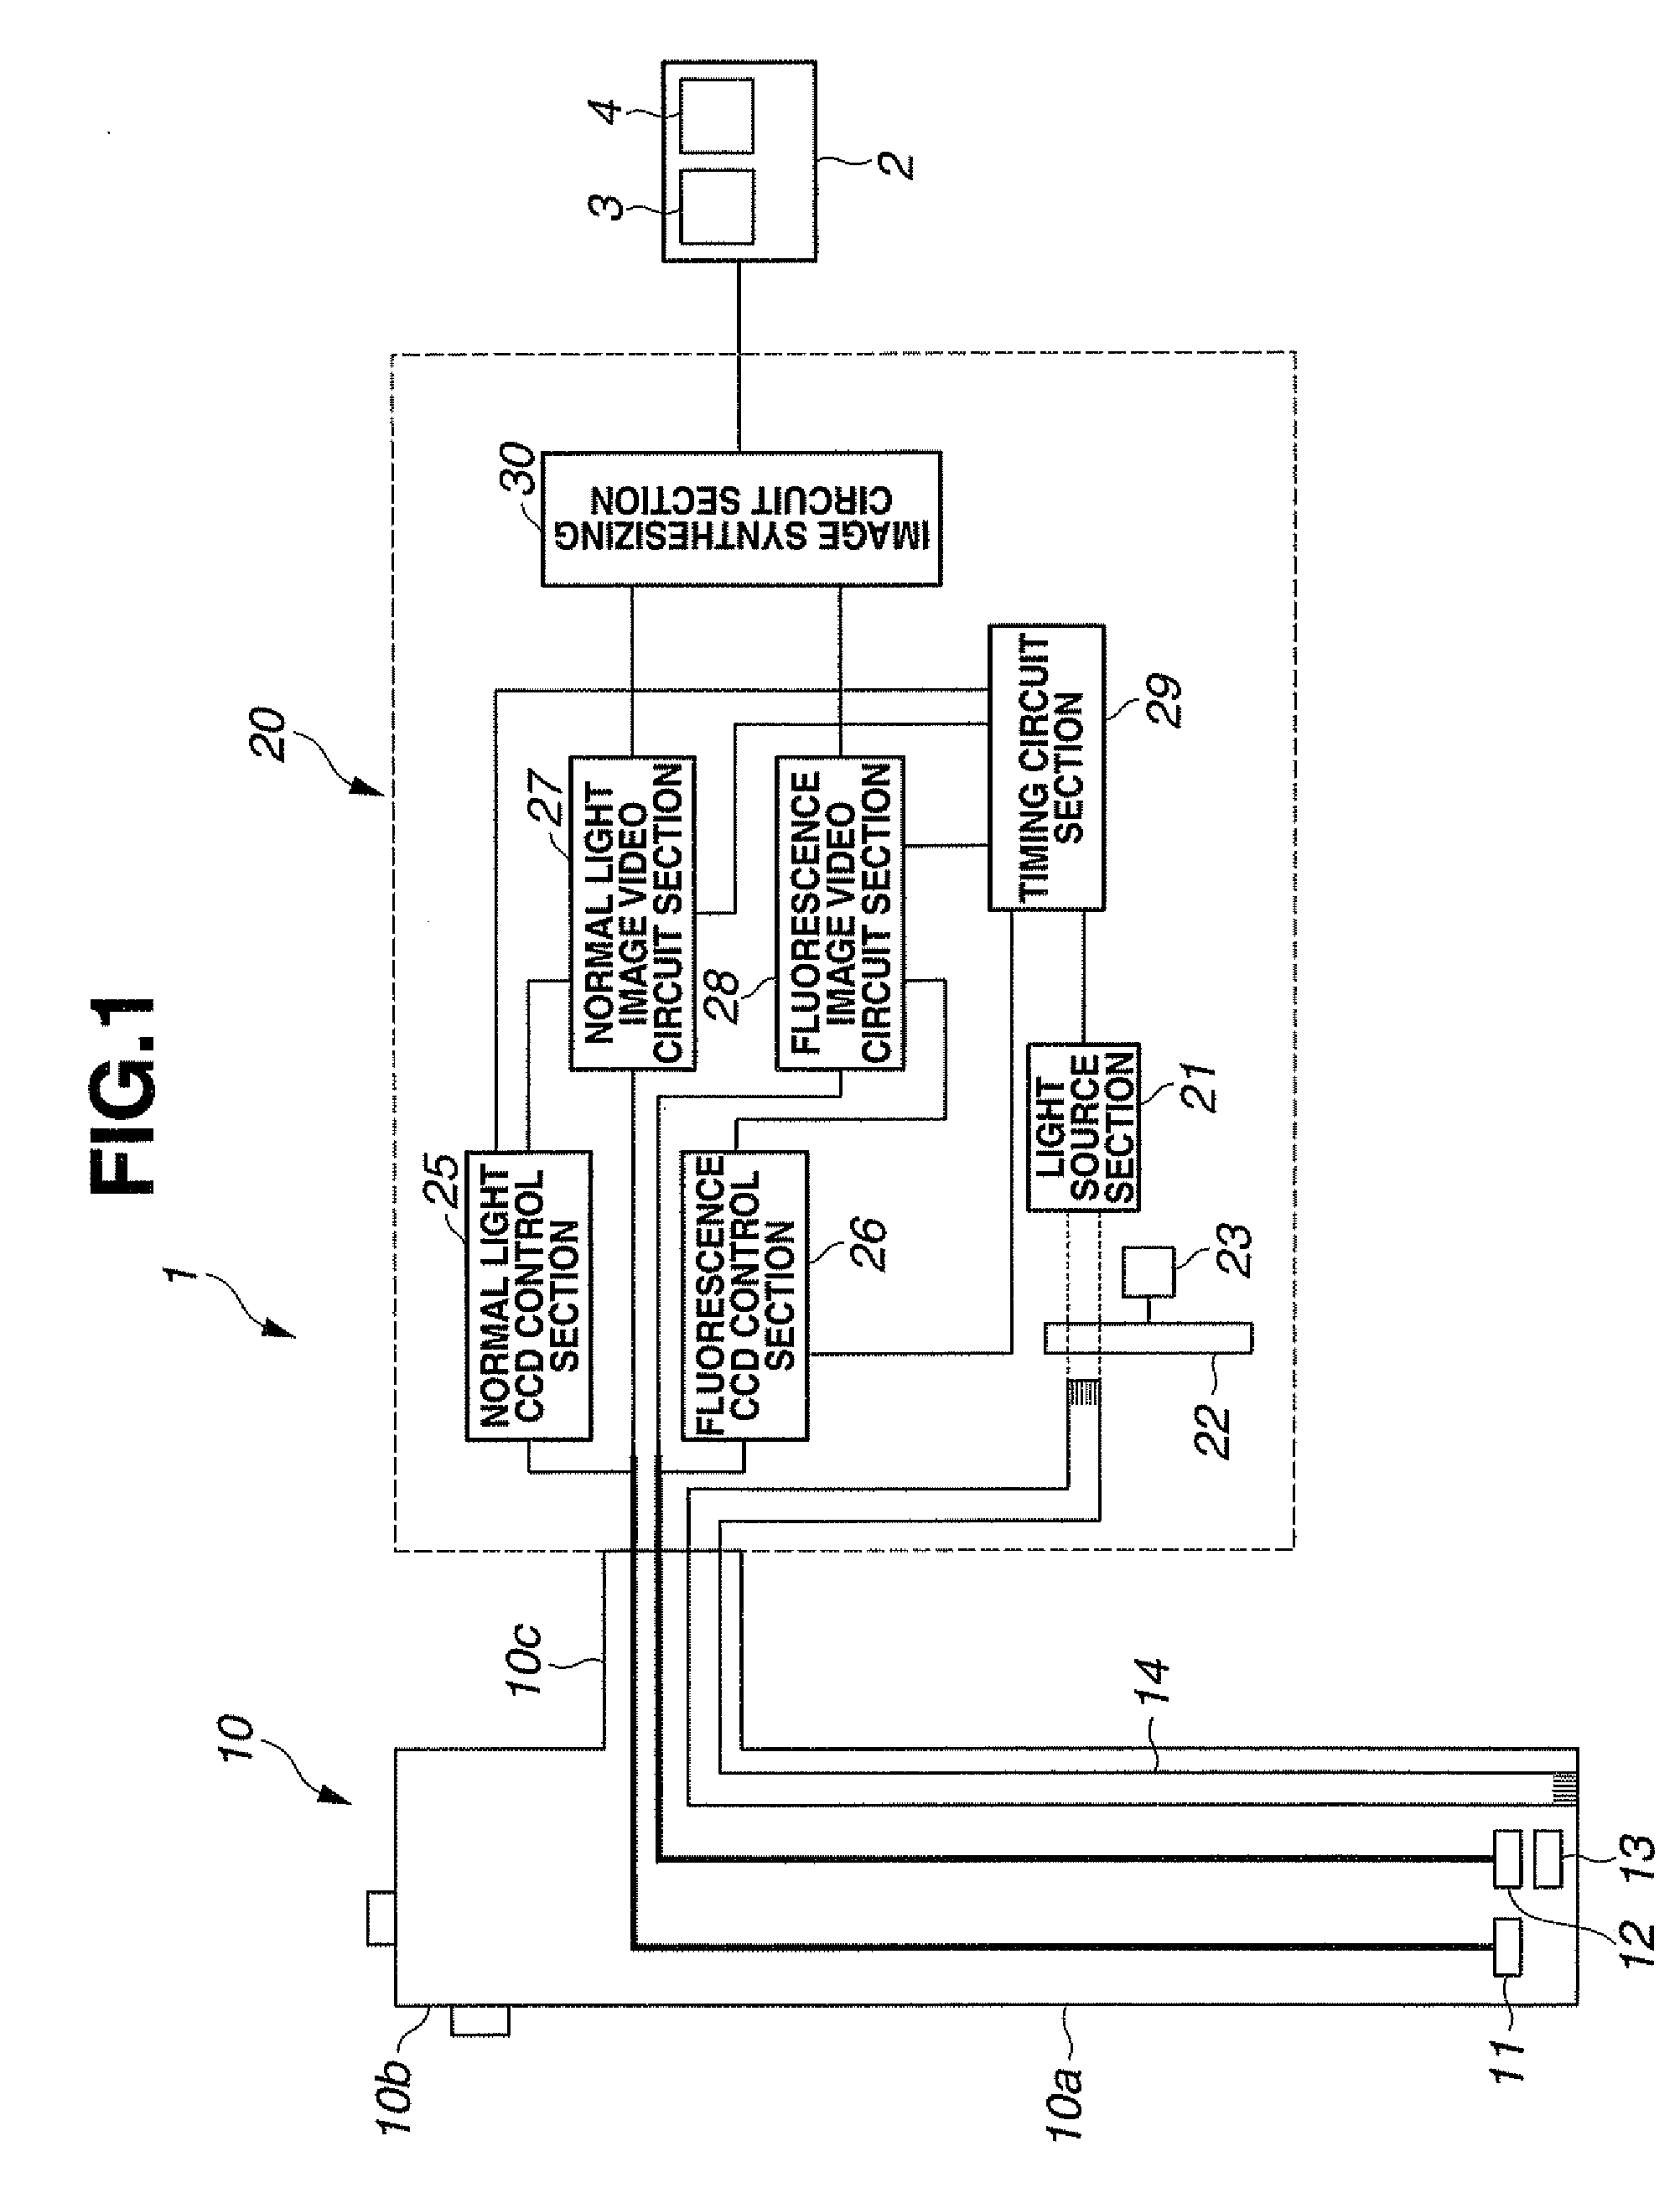 Endoscope apparatus and image processing apparatus